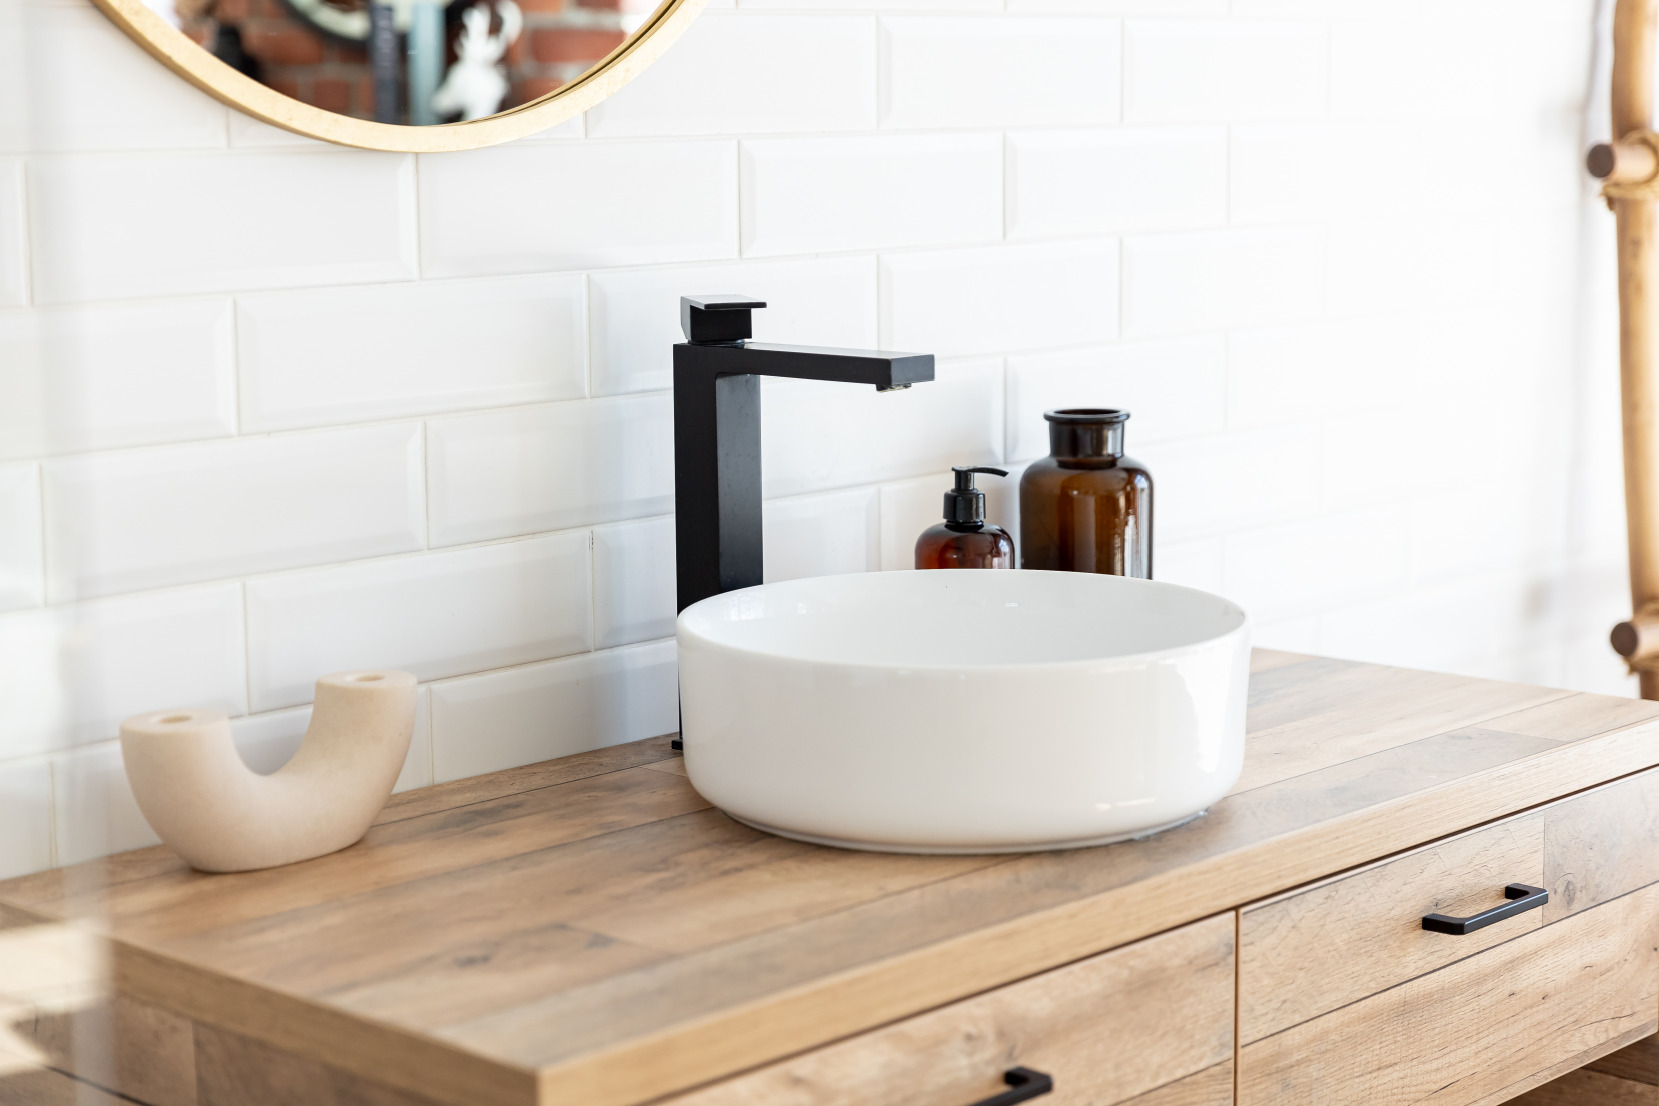 Loft style bathroom with white ceramic backsplash